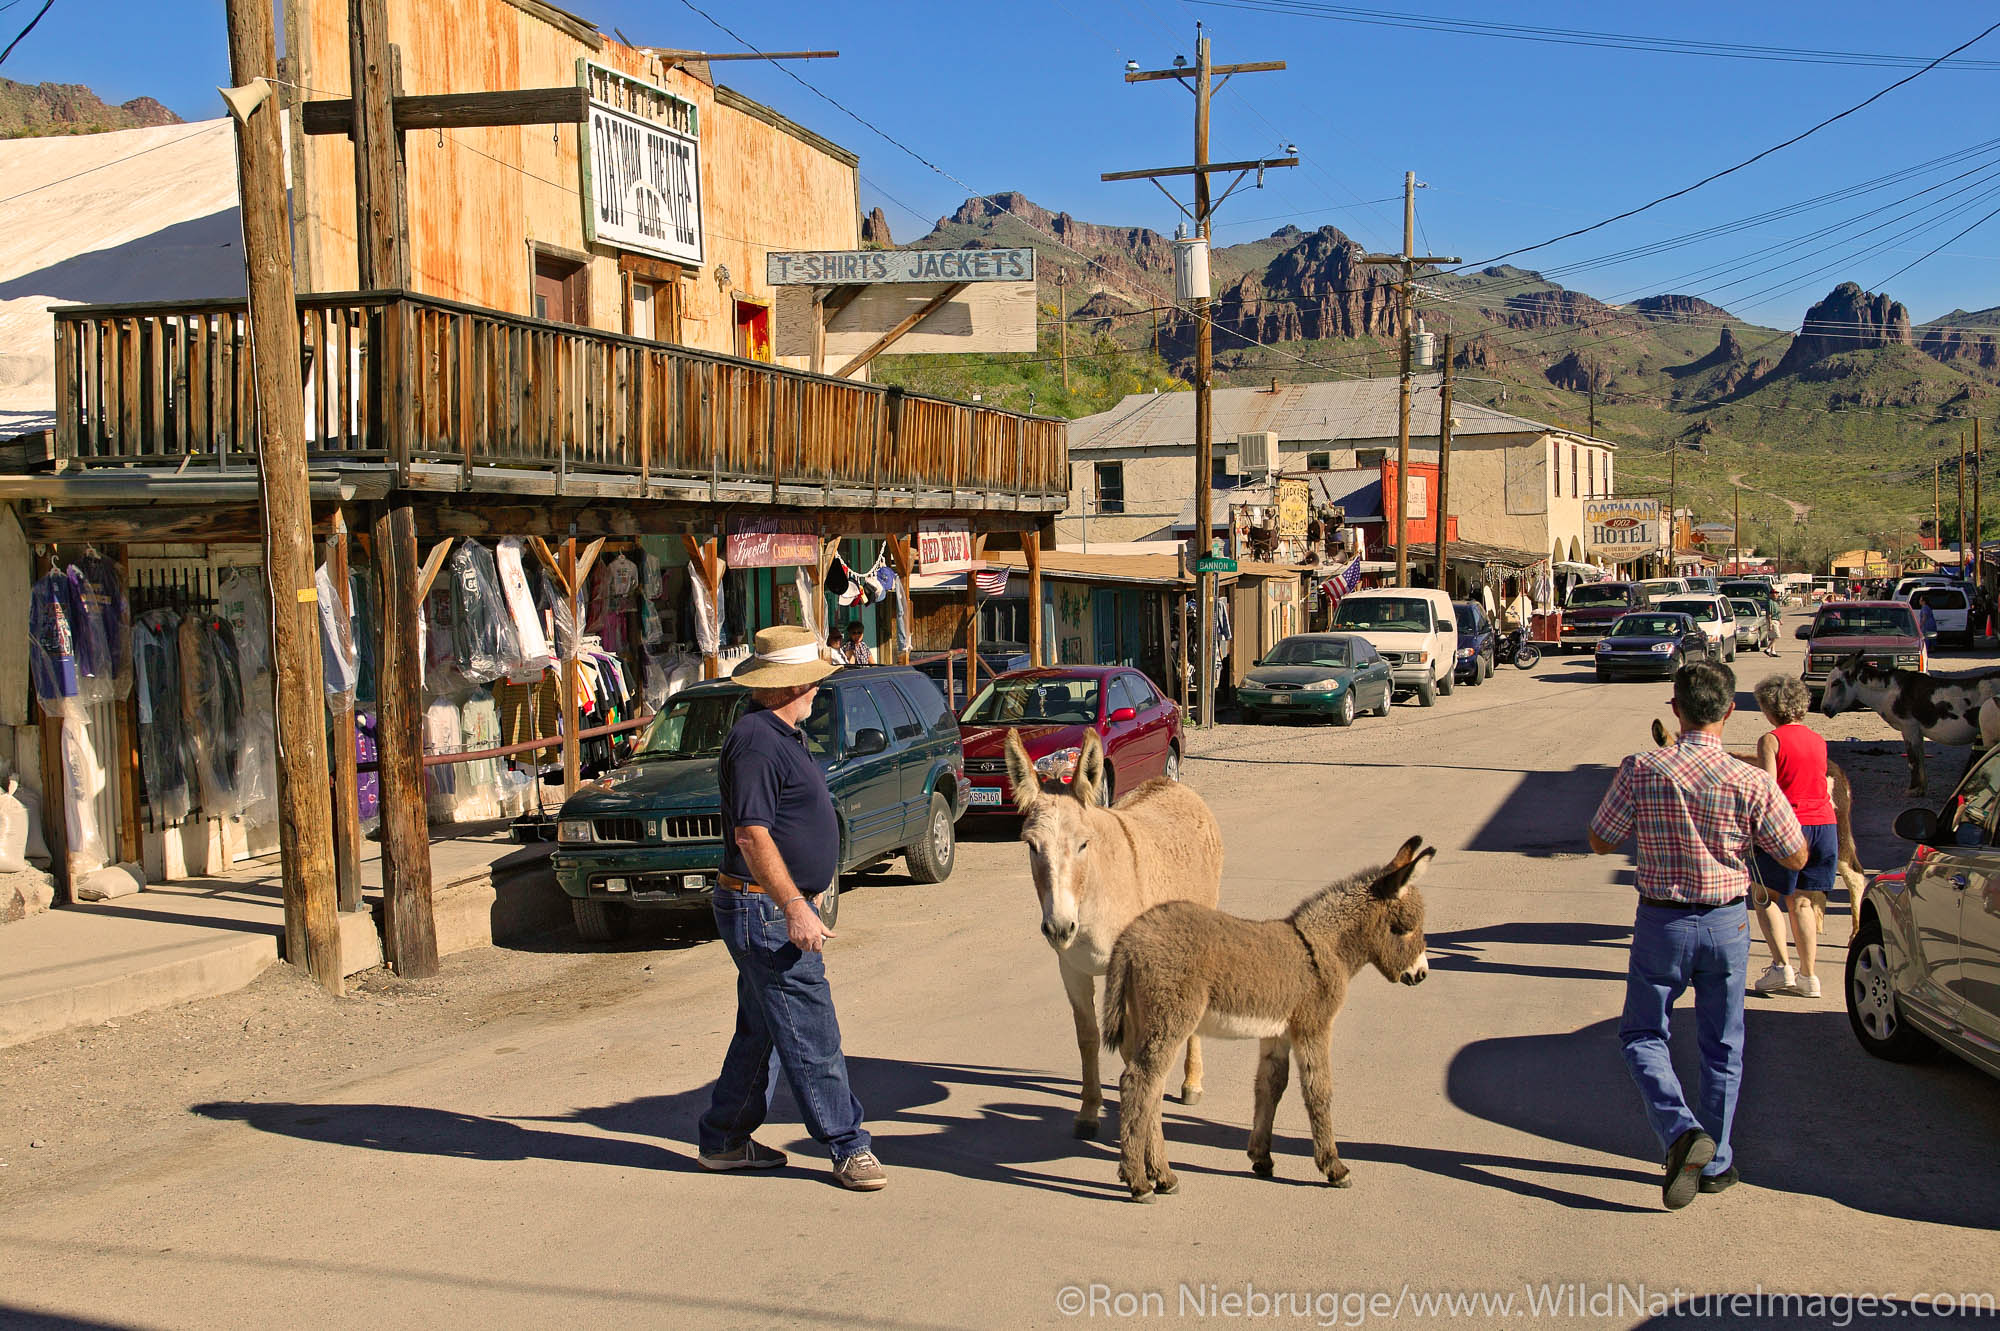 Historic Route 66 passes through Oatman, Arizona where wild burros roam freely in the street.